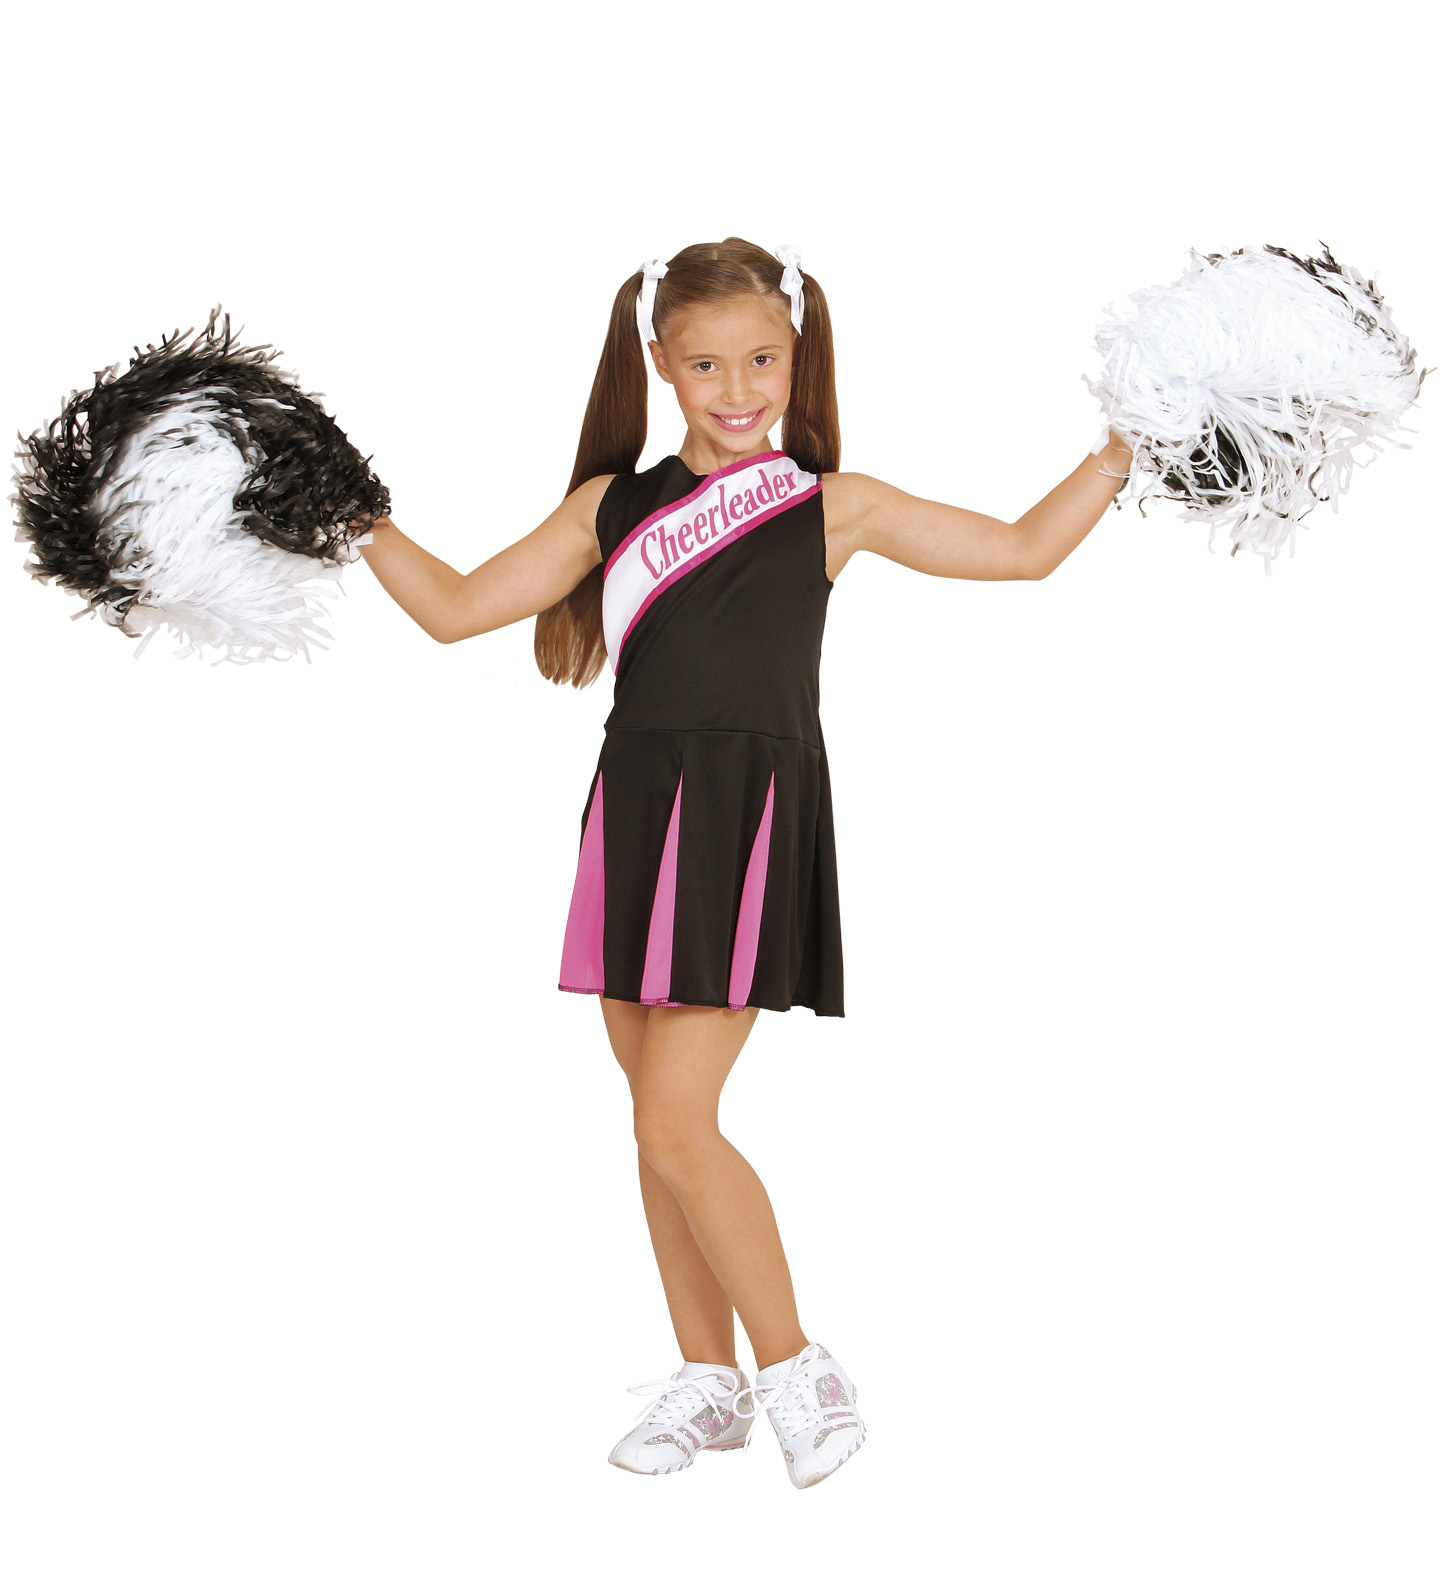 Costume da Cheerleader - Fantaparty.it